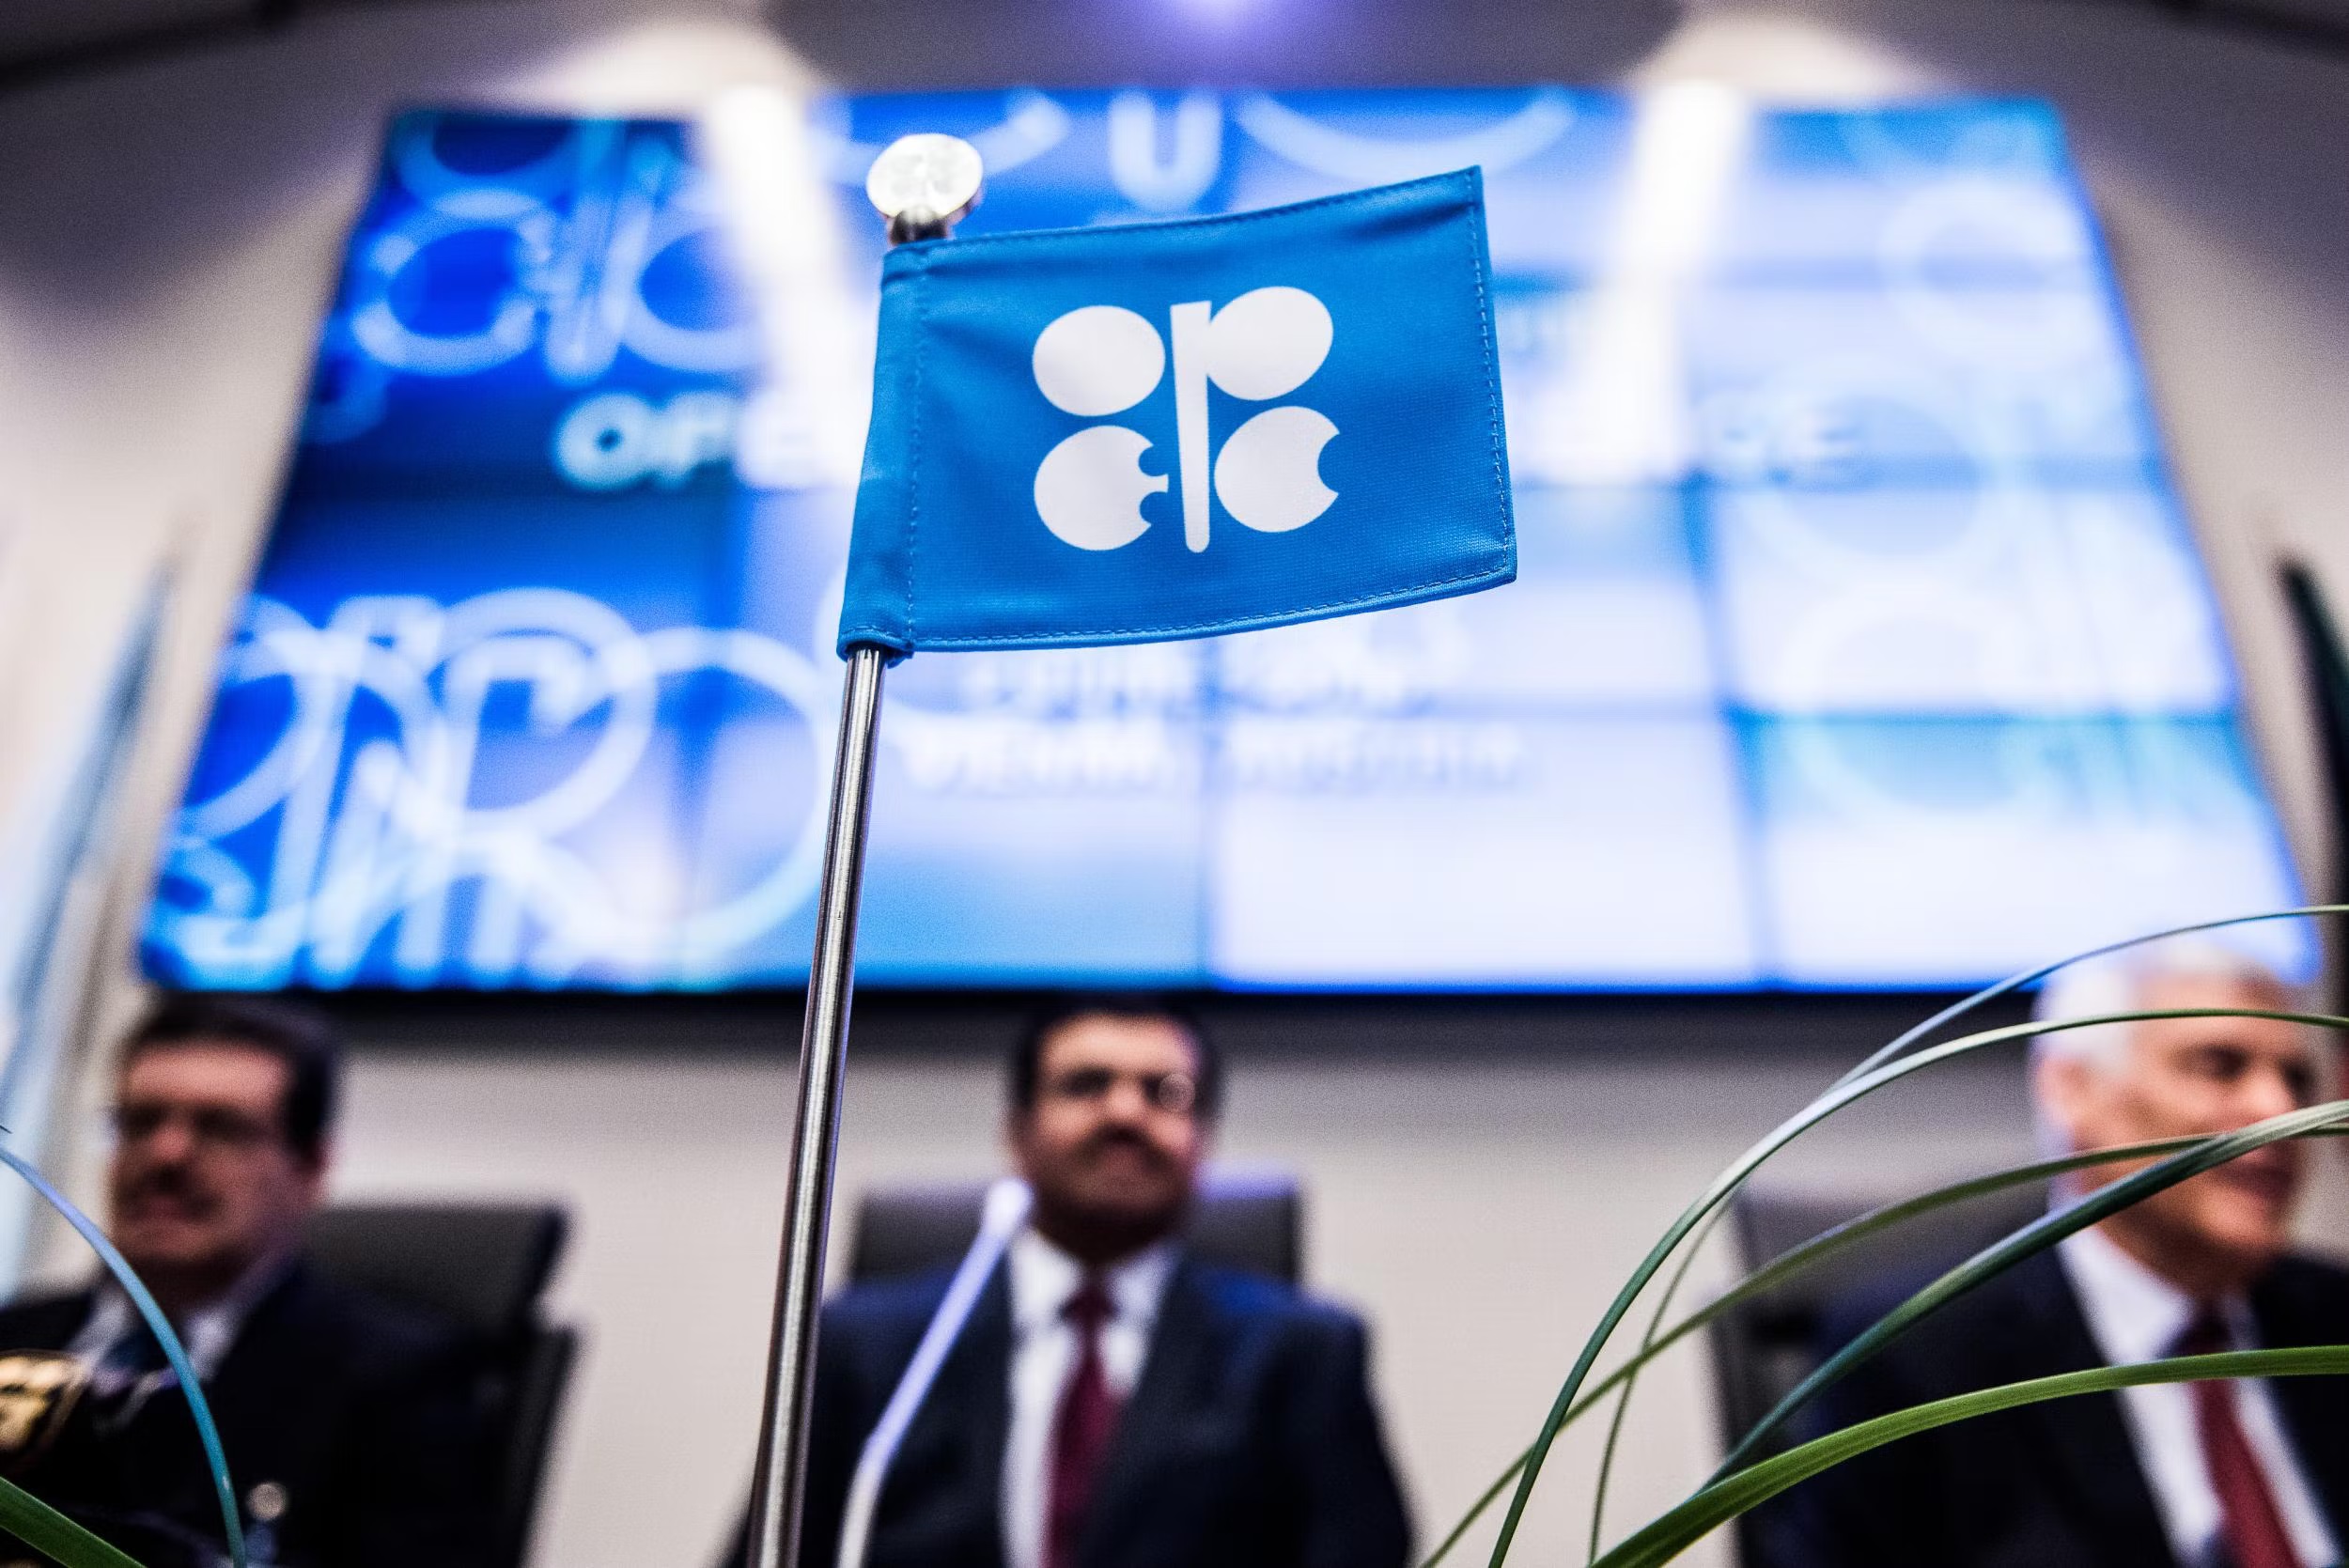 Manfaat dari Organisasi OPEC yang Diikuti oleh Negara Iran